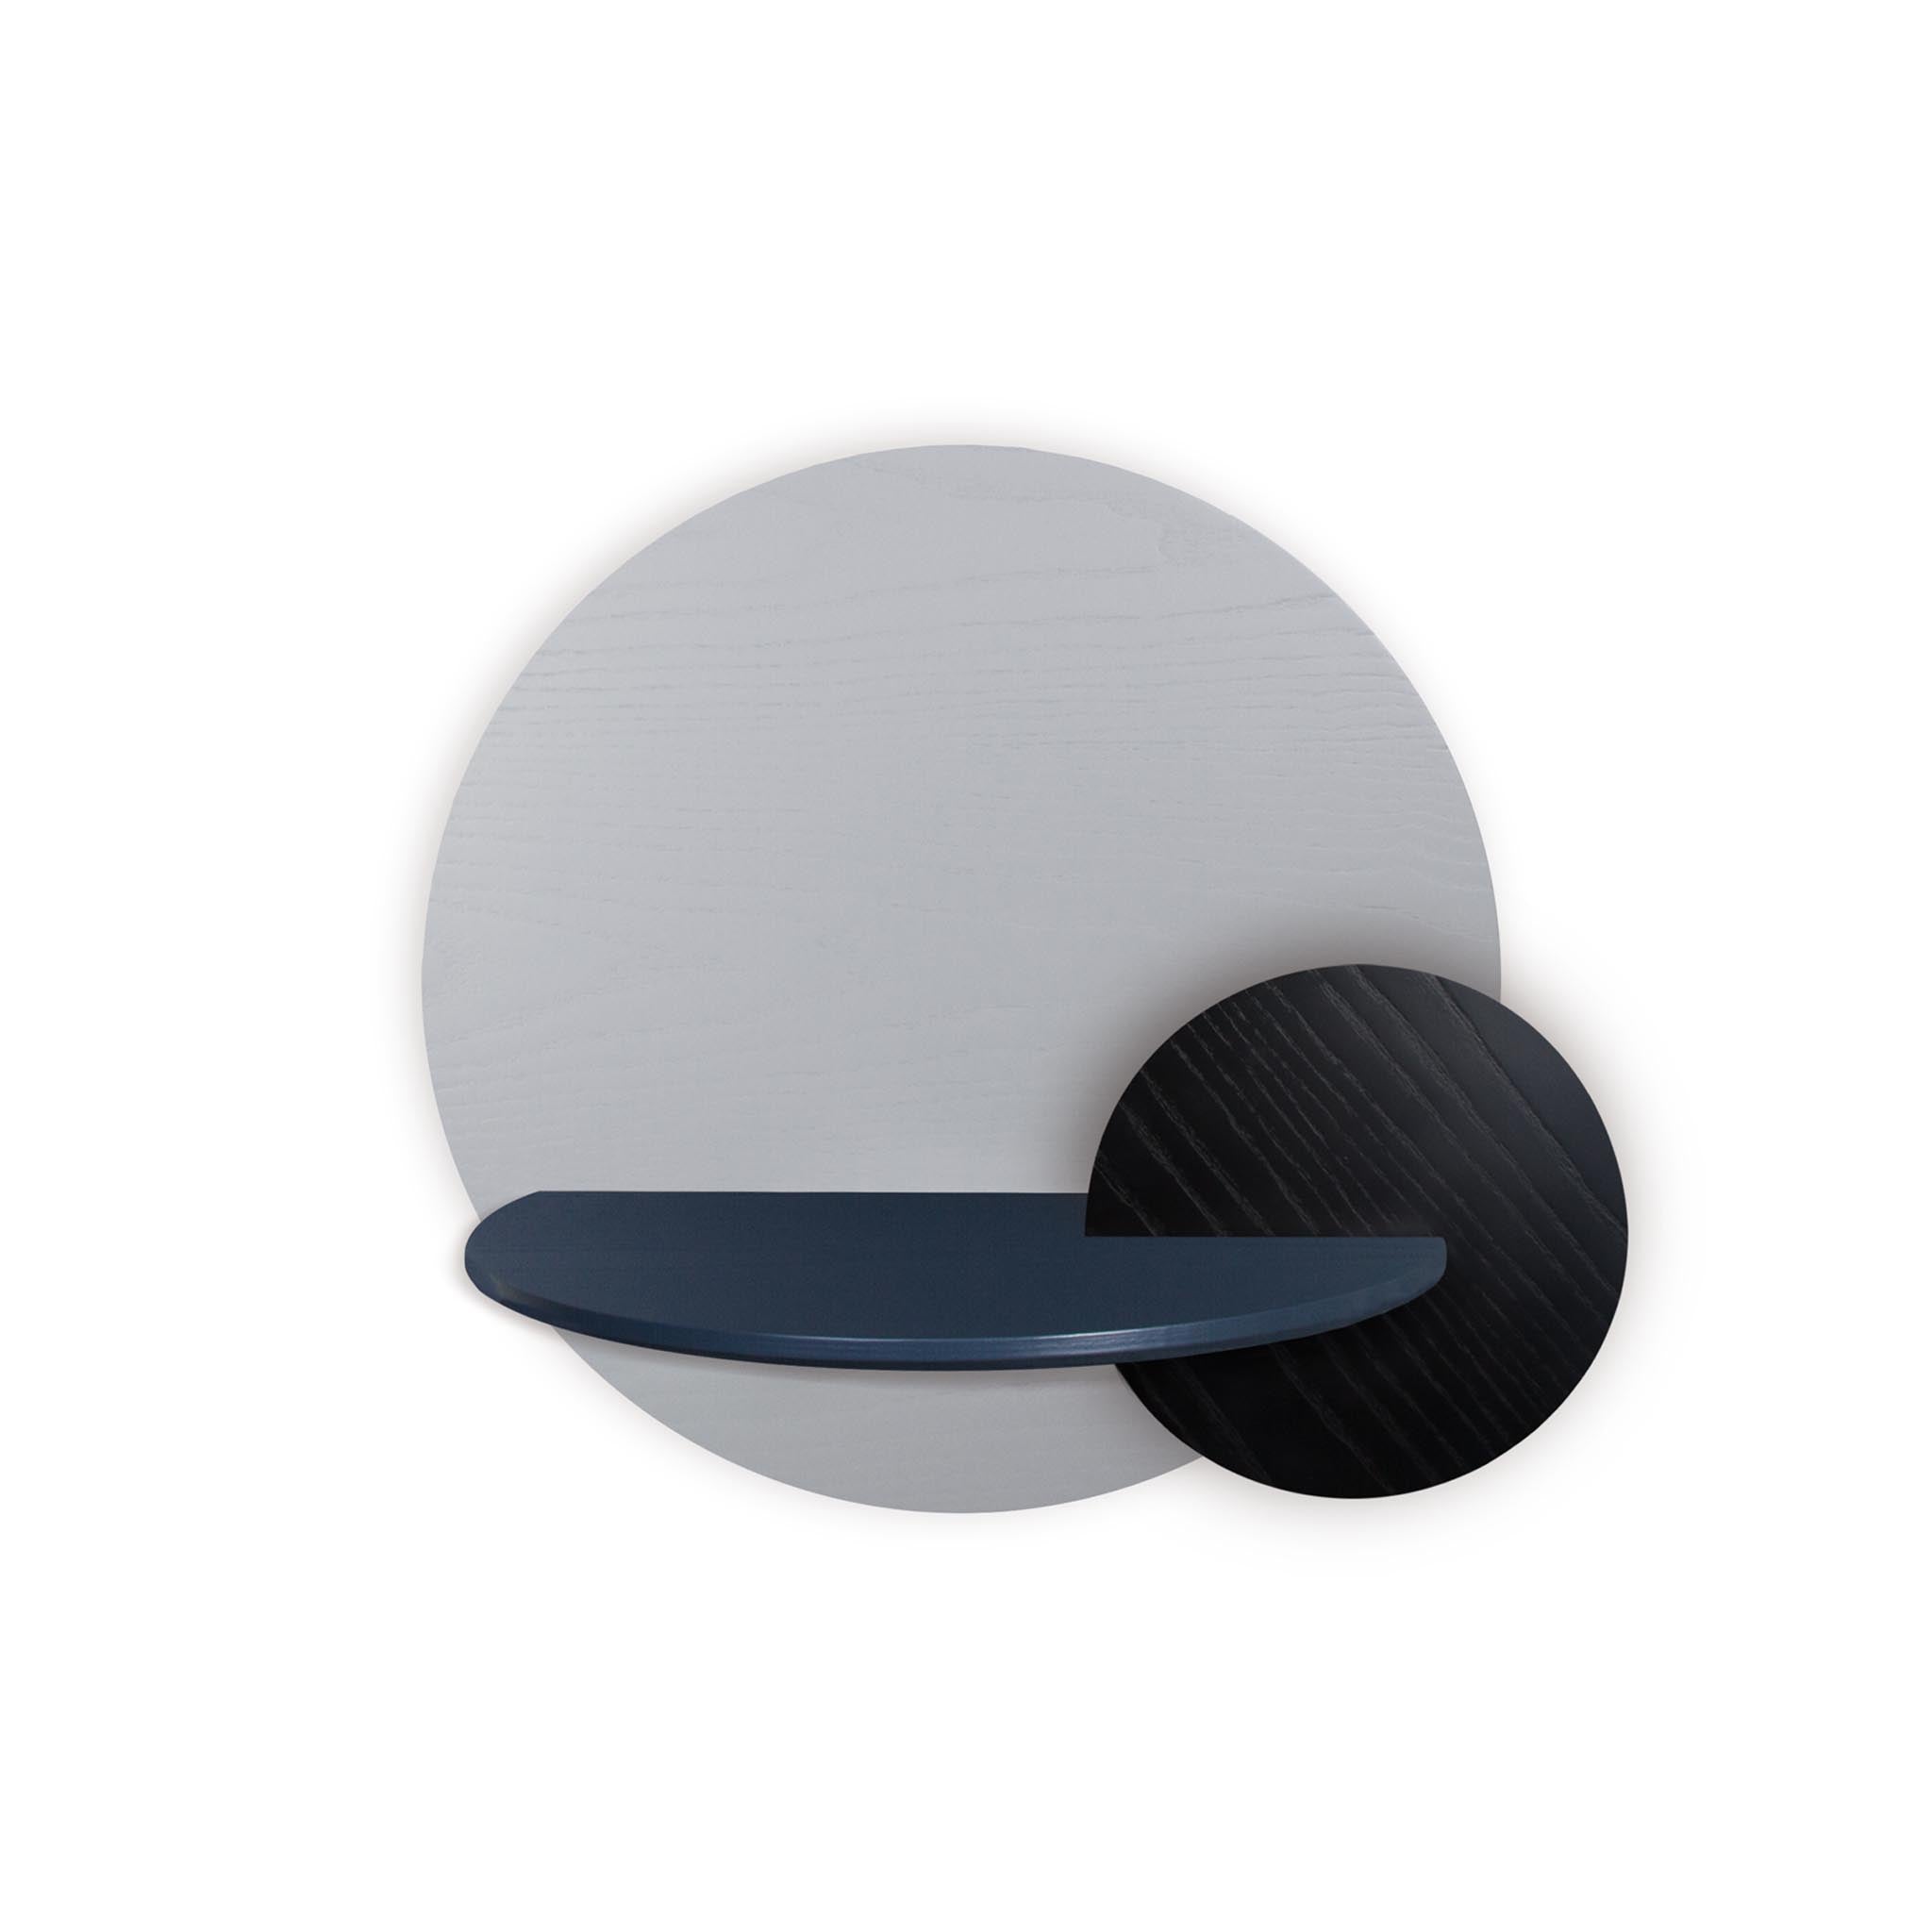 Alba floating nightstand DUO · Grey circle